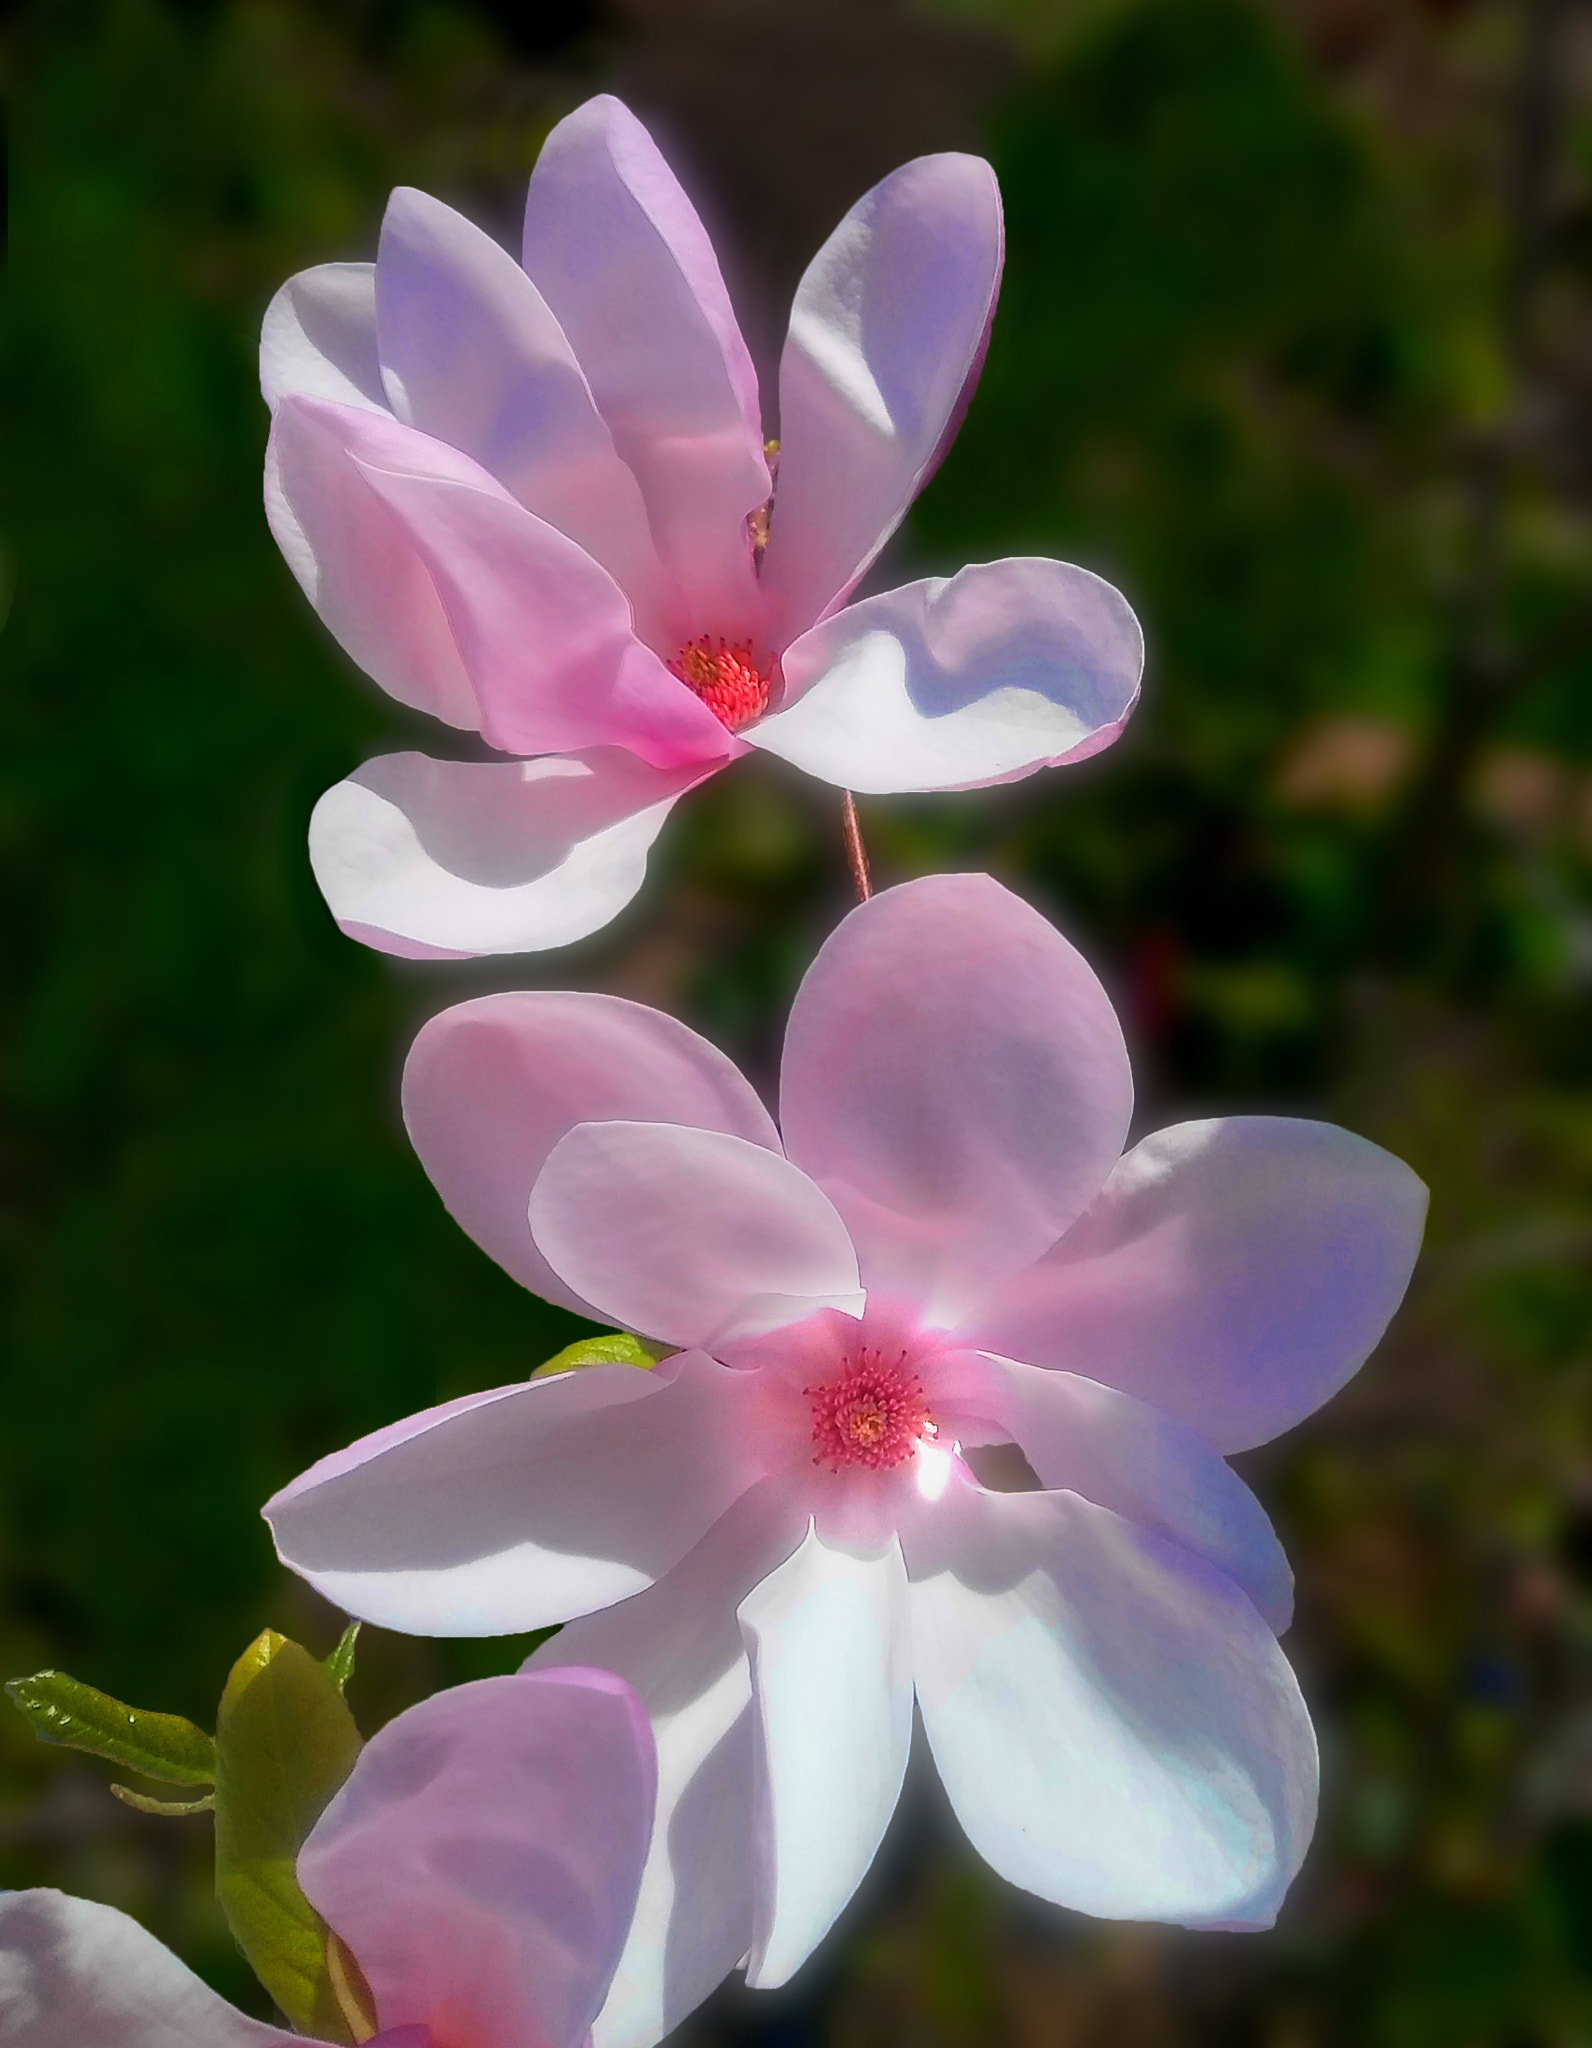 LG STYLO 2 PLUS sample photo. Pretty magnolia blossoms photography